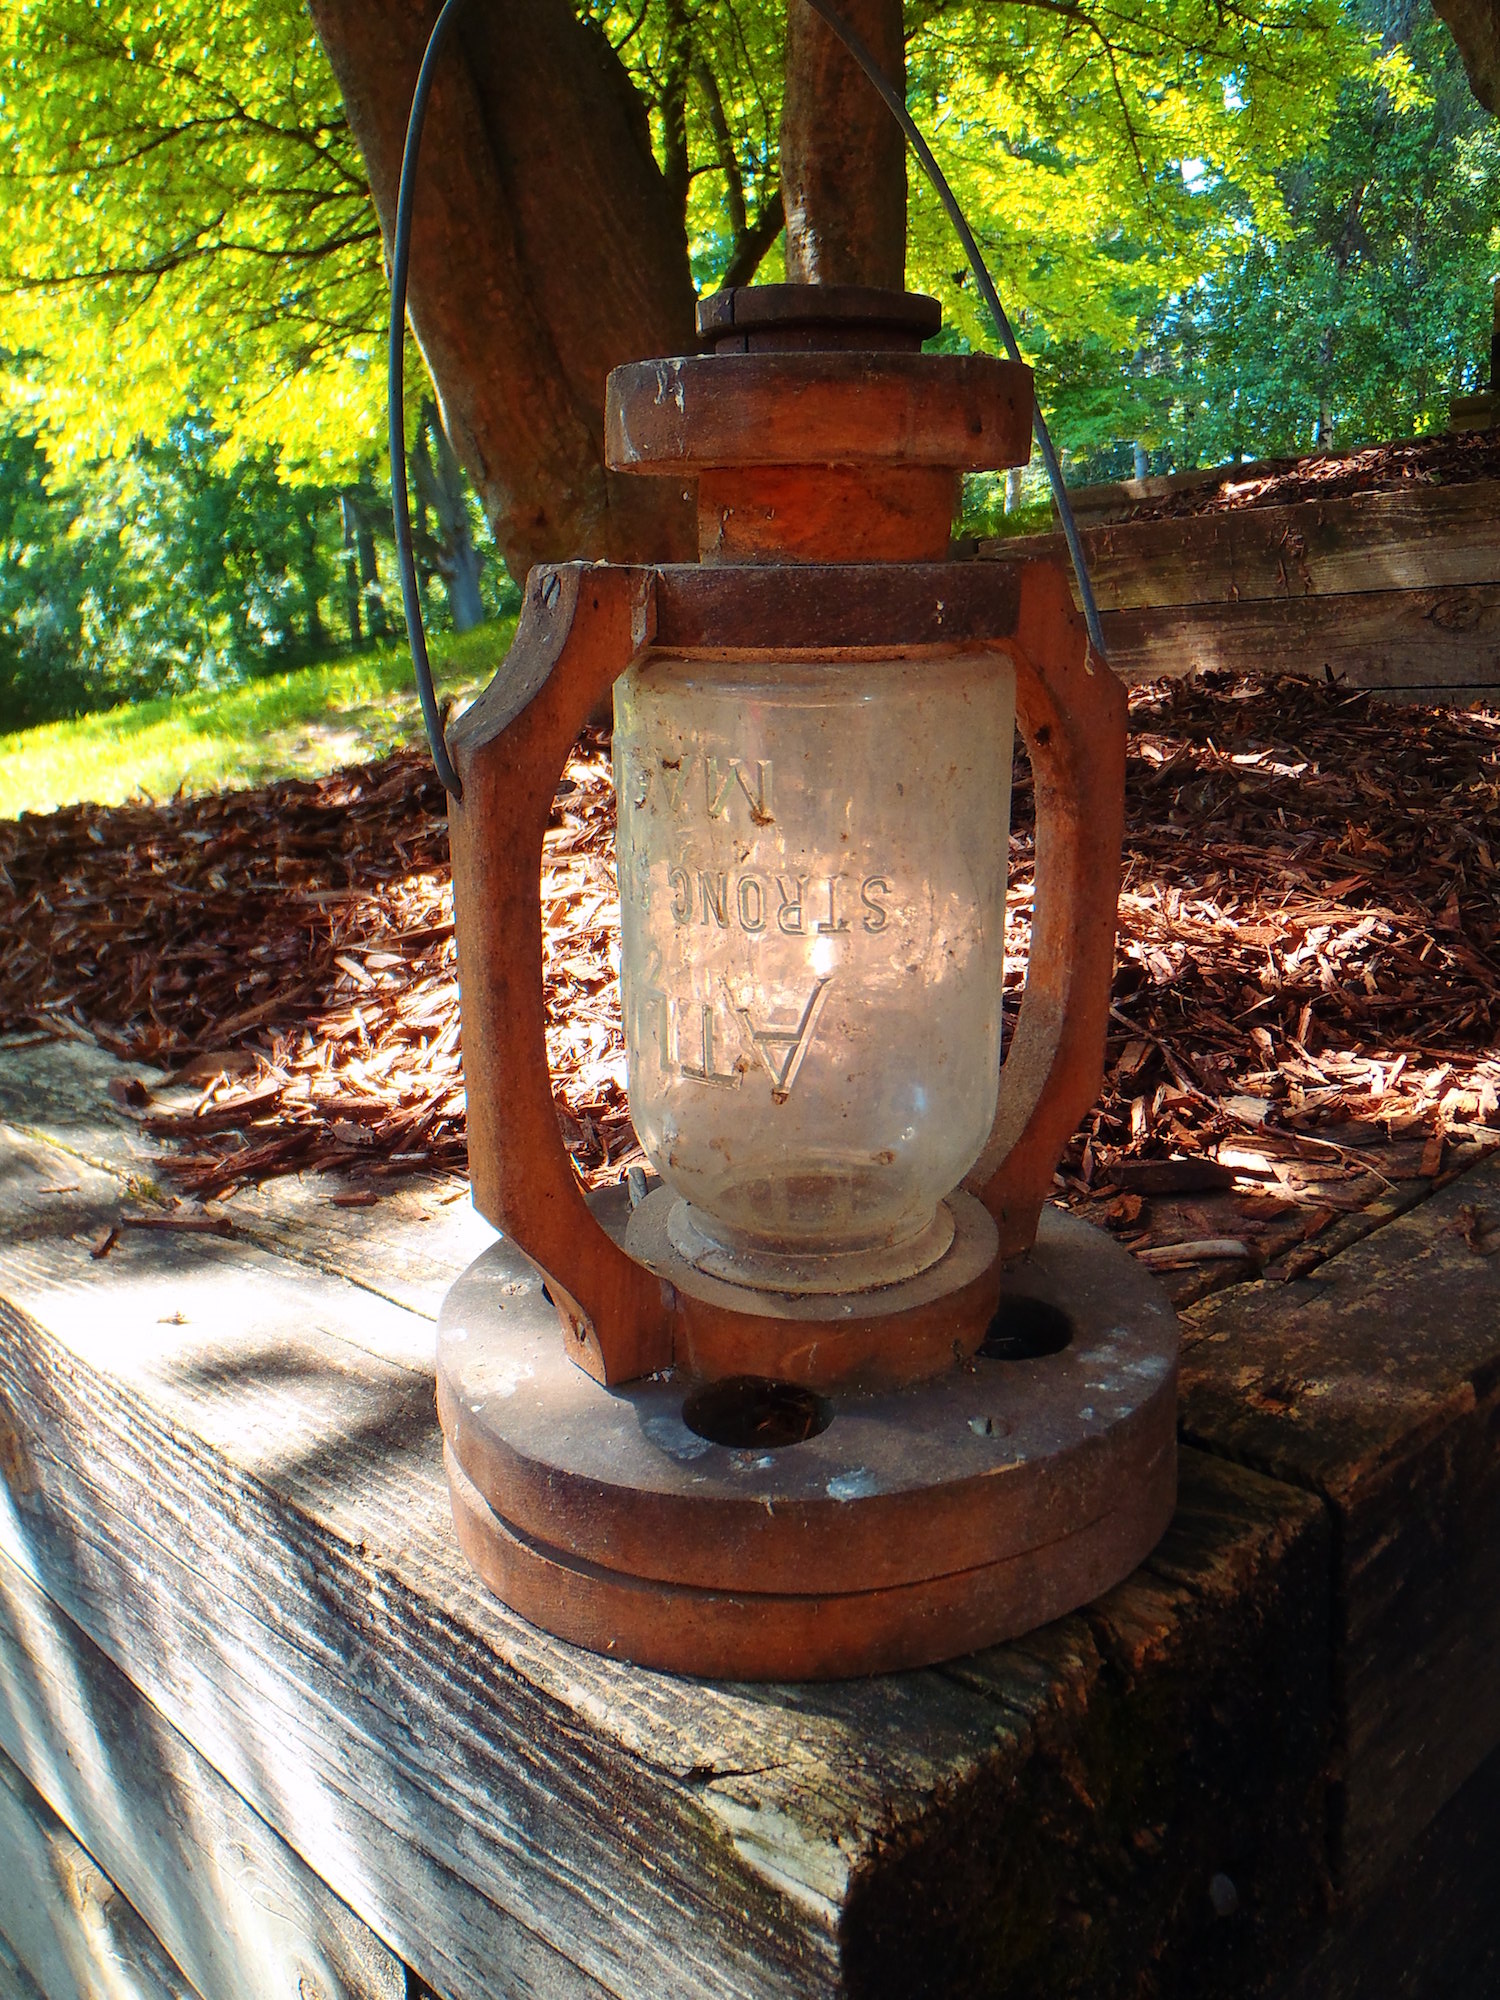 An antique lantern